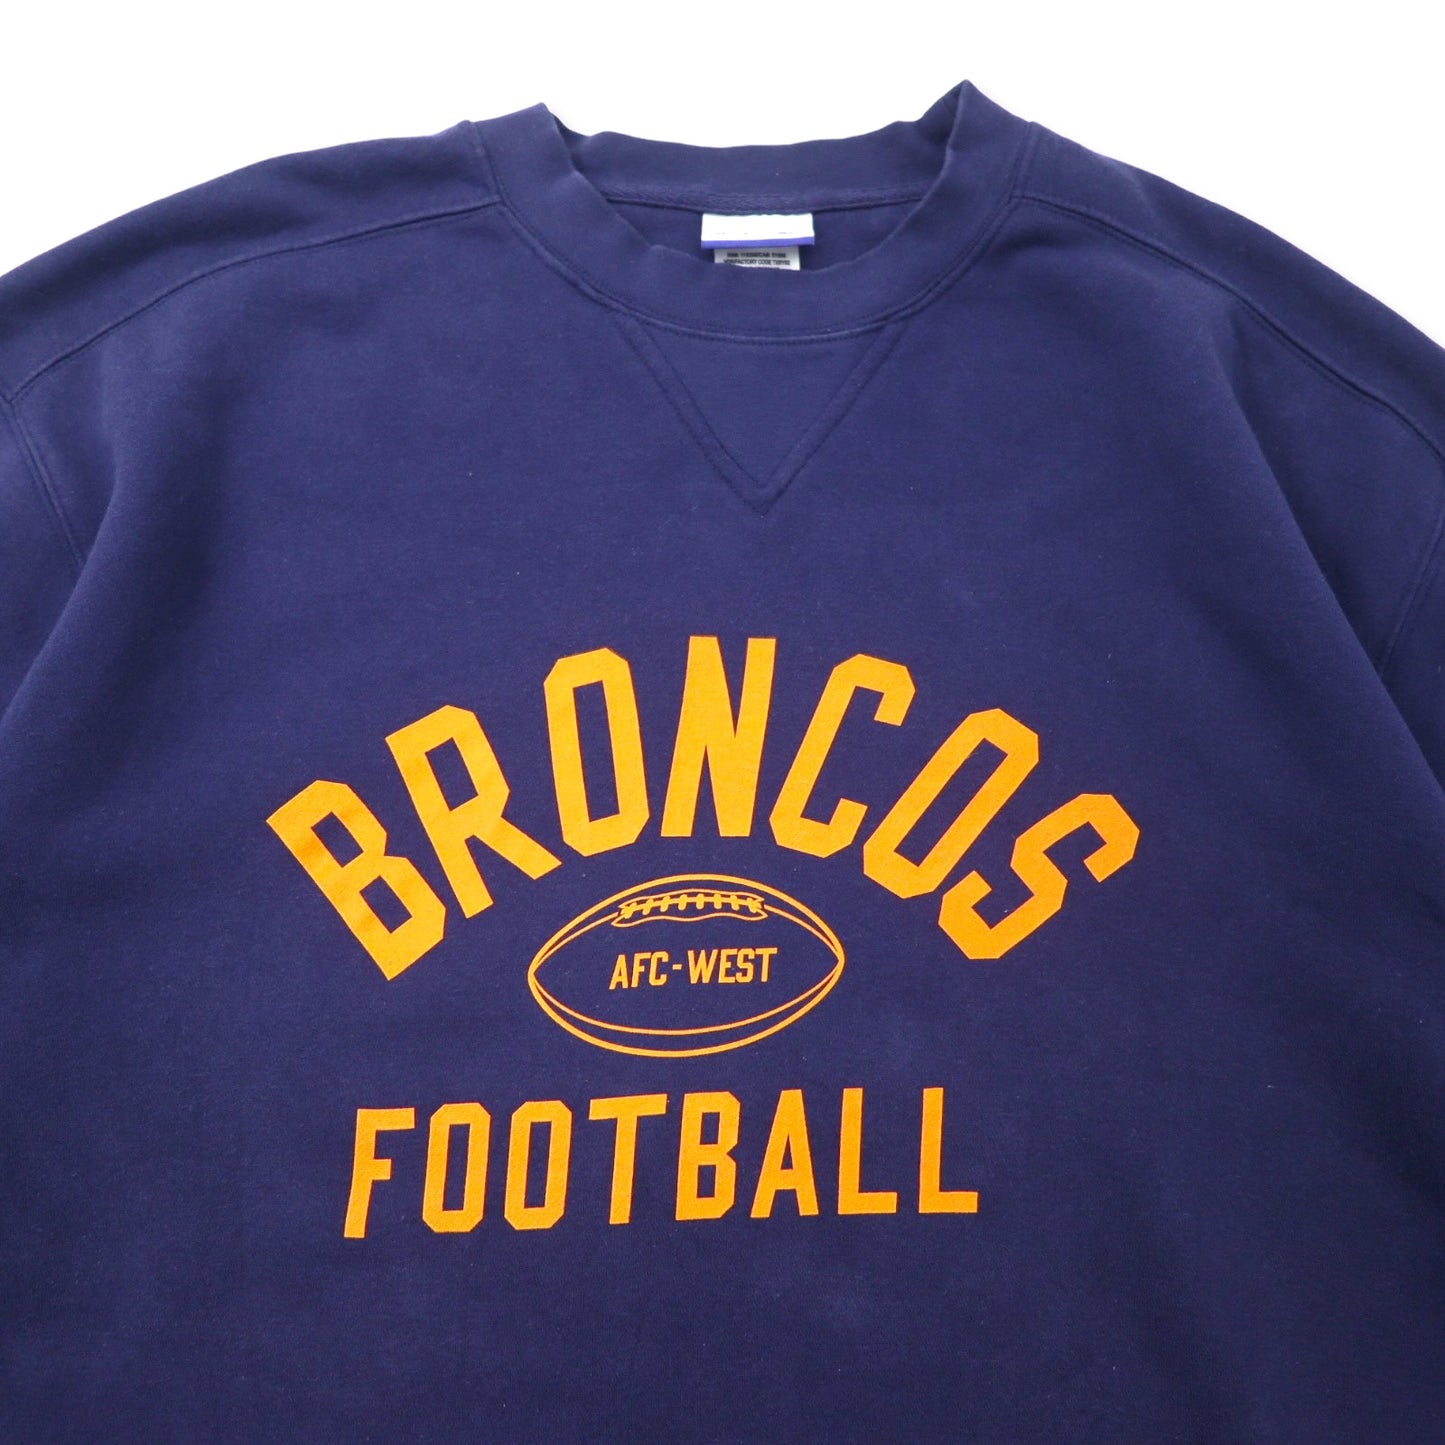 Reebok 00年代 NFL プリント スウェット XL ネイビー コットン 裏起毛 前V BRONCOS FOOTBALL ビッグサイズ